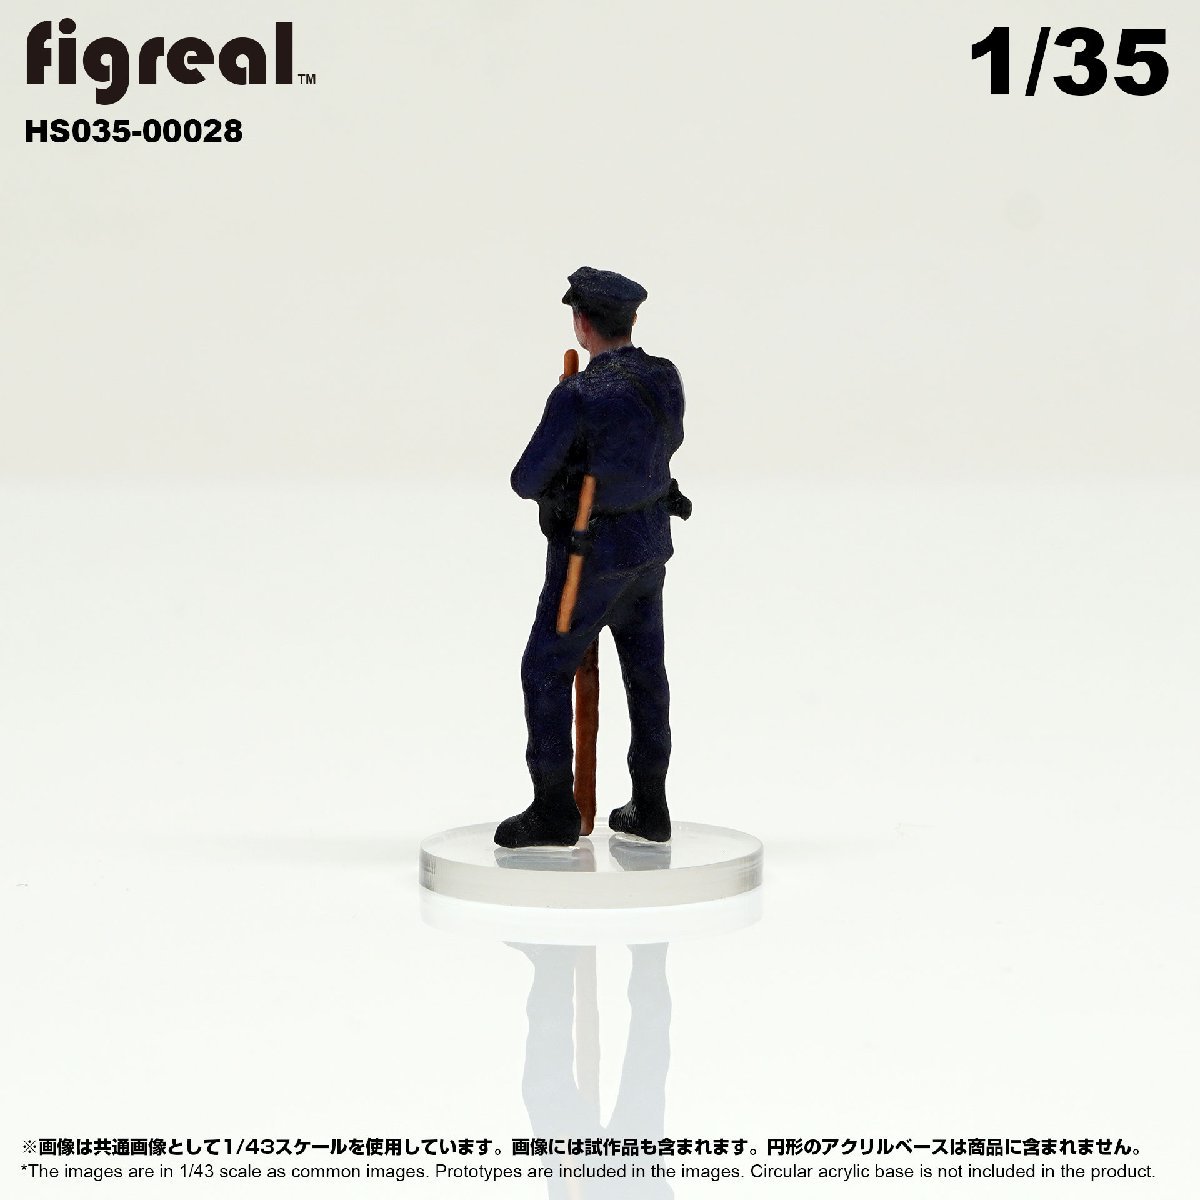 HS035-00028 figreal 旧日本警察官 1/35 高精細フィギュア_画像4